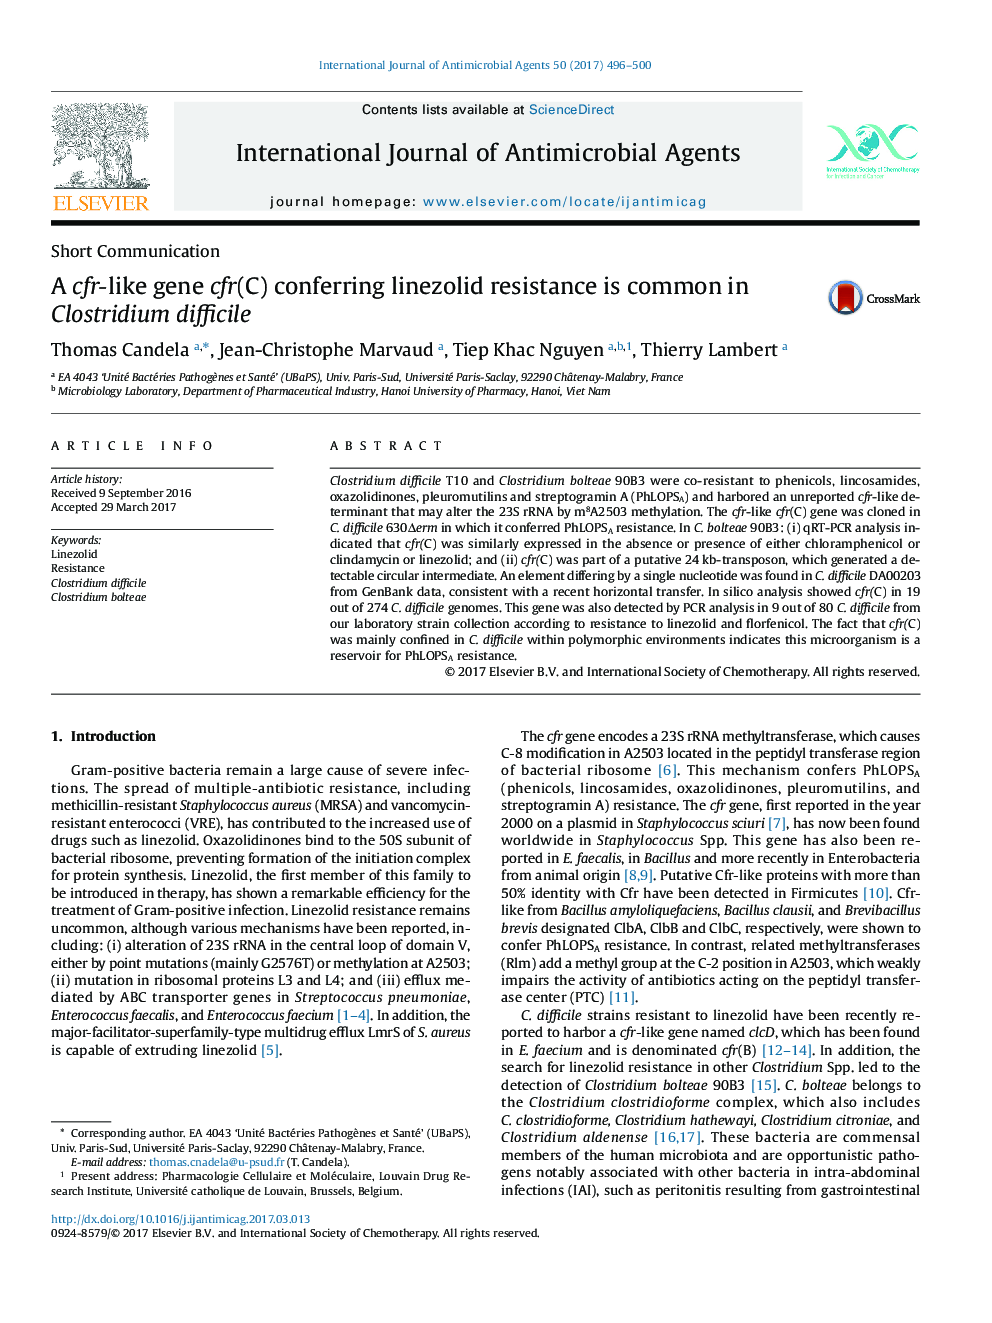 A cfr-like gene cfr(C) conferring linezolid resistance is common in Clostridium difficile